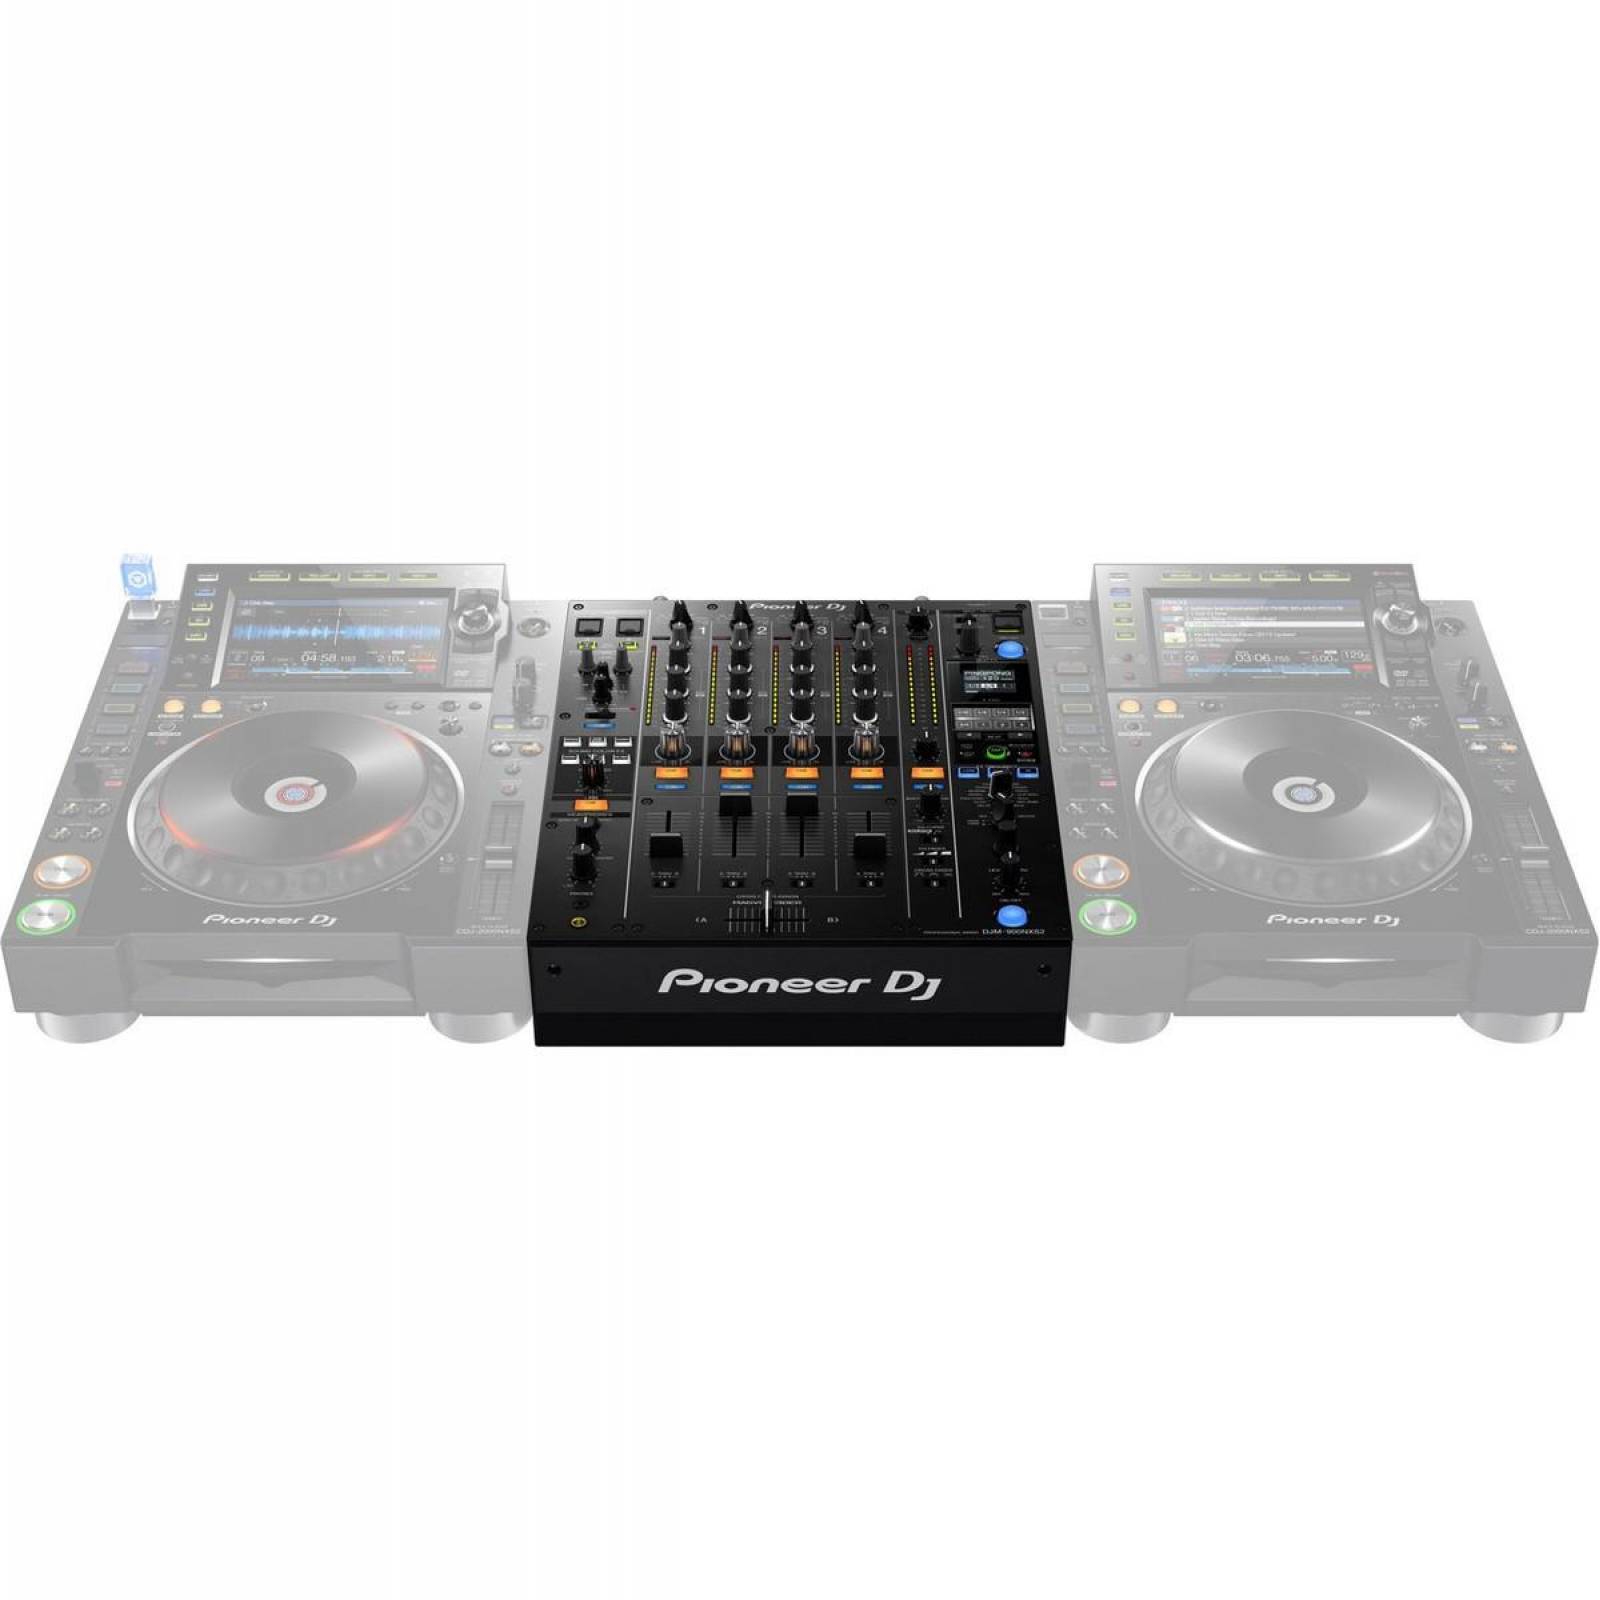 MIXER DJ PROFESIONAL PIONEER DJM-900NXS2 